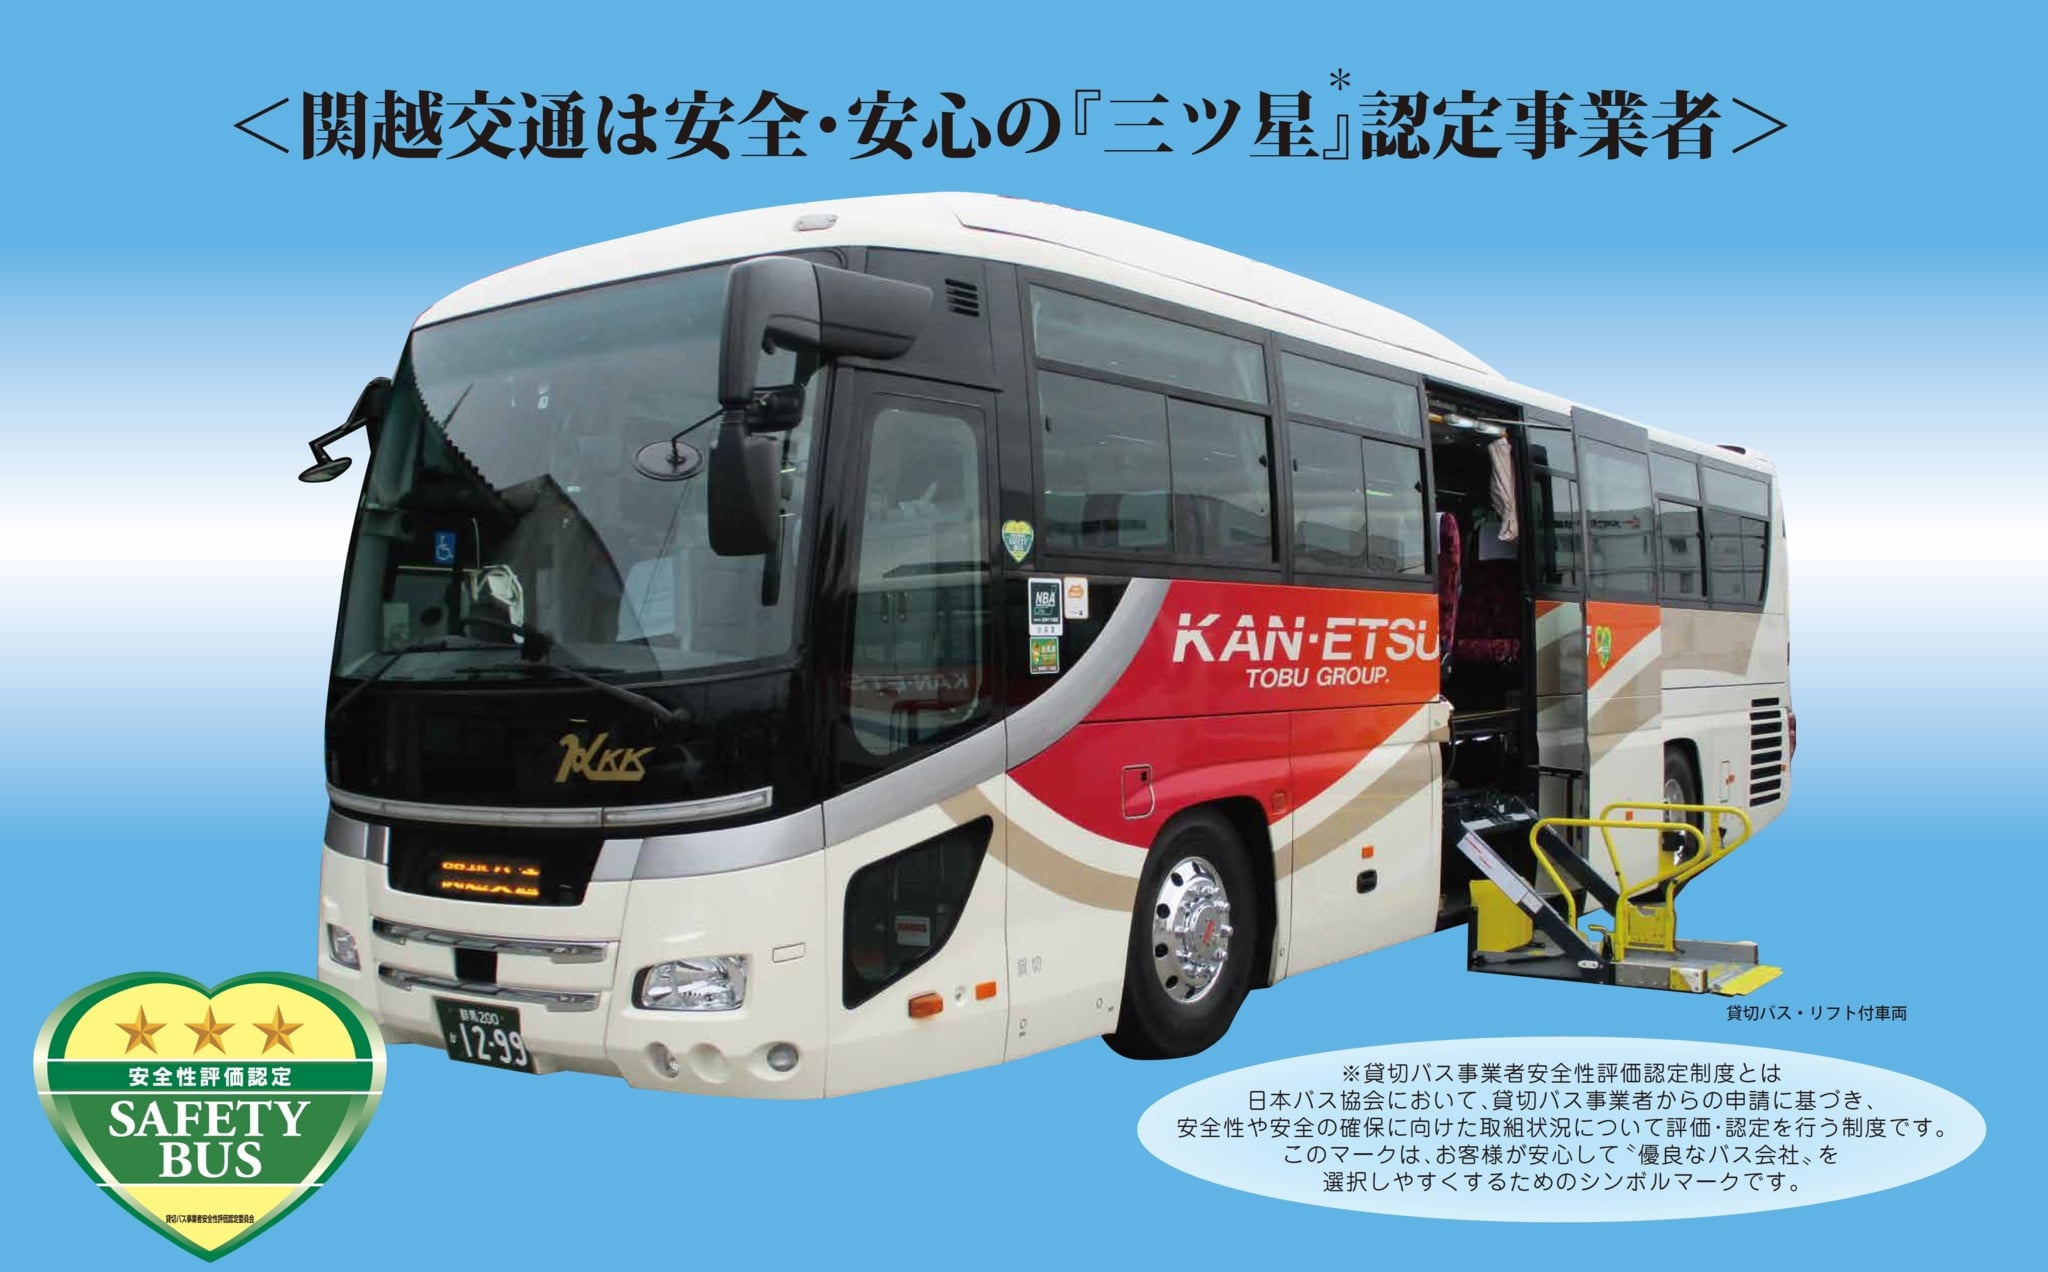 貸切バス 関越交通株式会社 公式 群馬県の貸切 高速 乗合バス タクシー